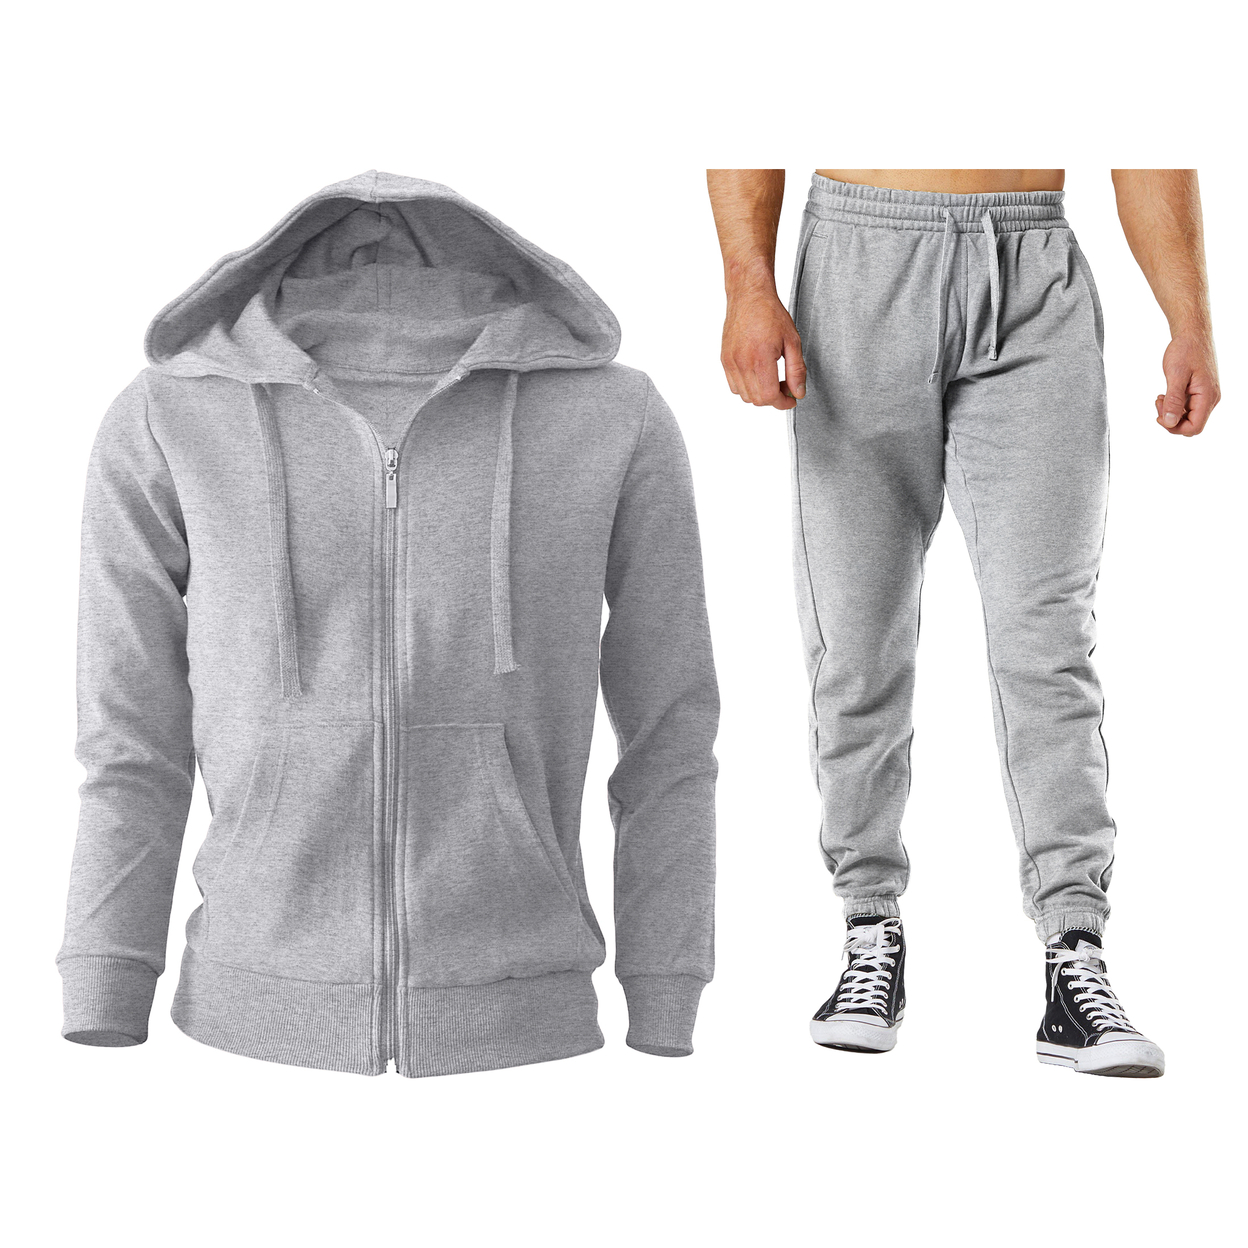 2/4-Piece: Men's Winter Warm Cozy Athletic Multi-Pockets BIG & TALL Sweatsuit Set - Grey, 1, X-large